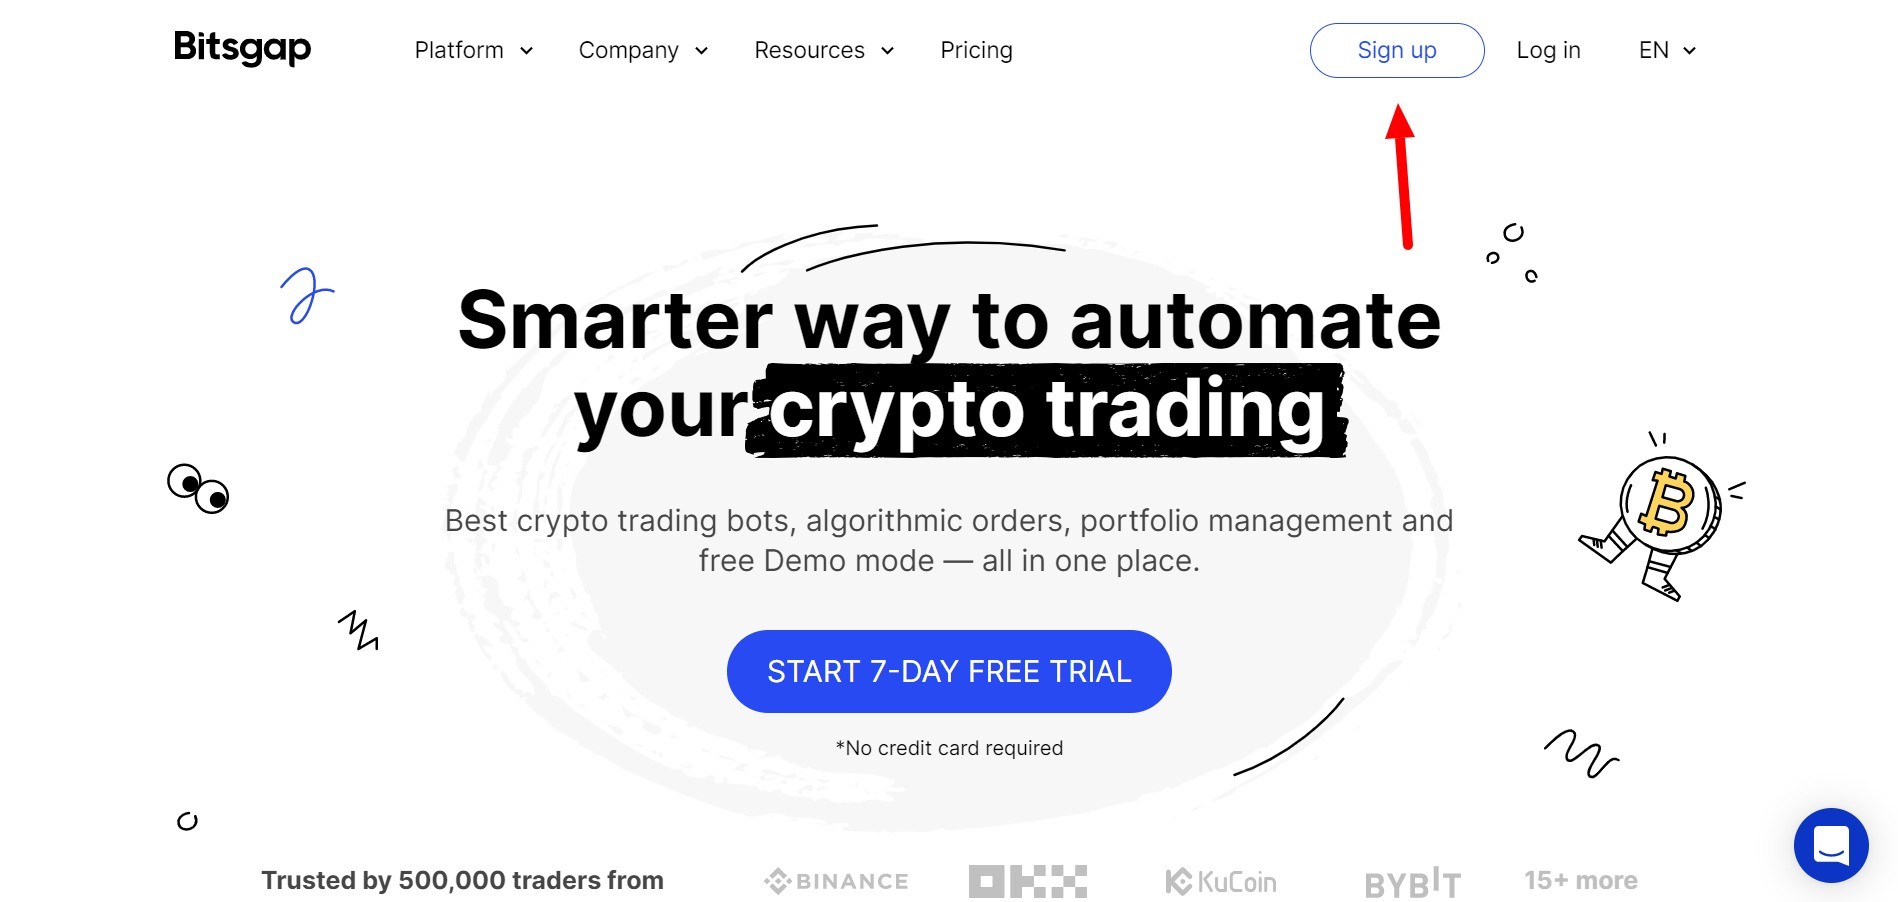 Bitsgap — Best Crypto Trading Bots and Automated Trading Platform